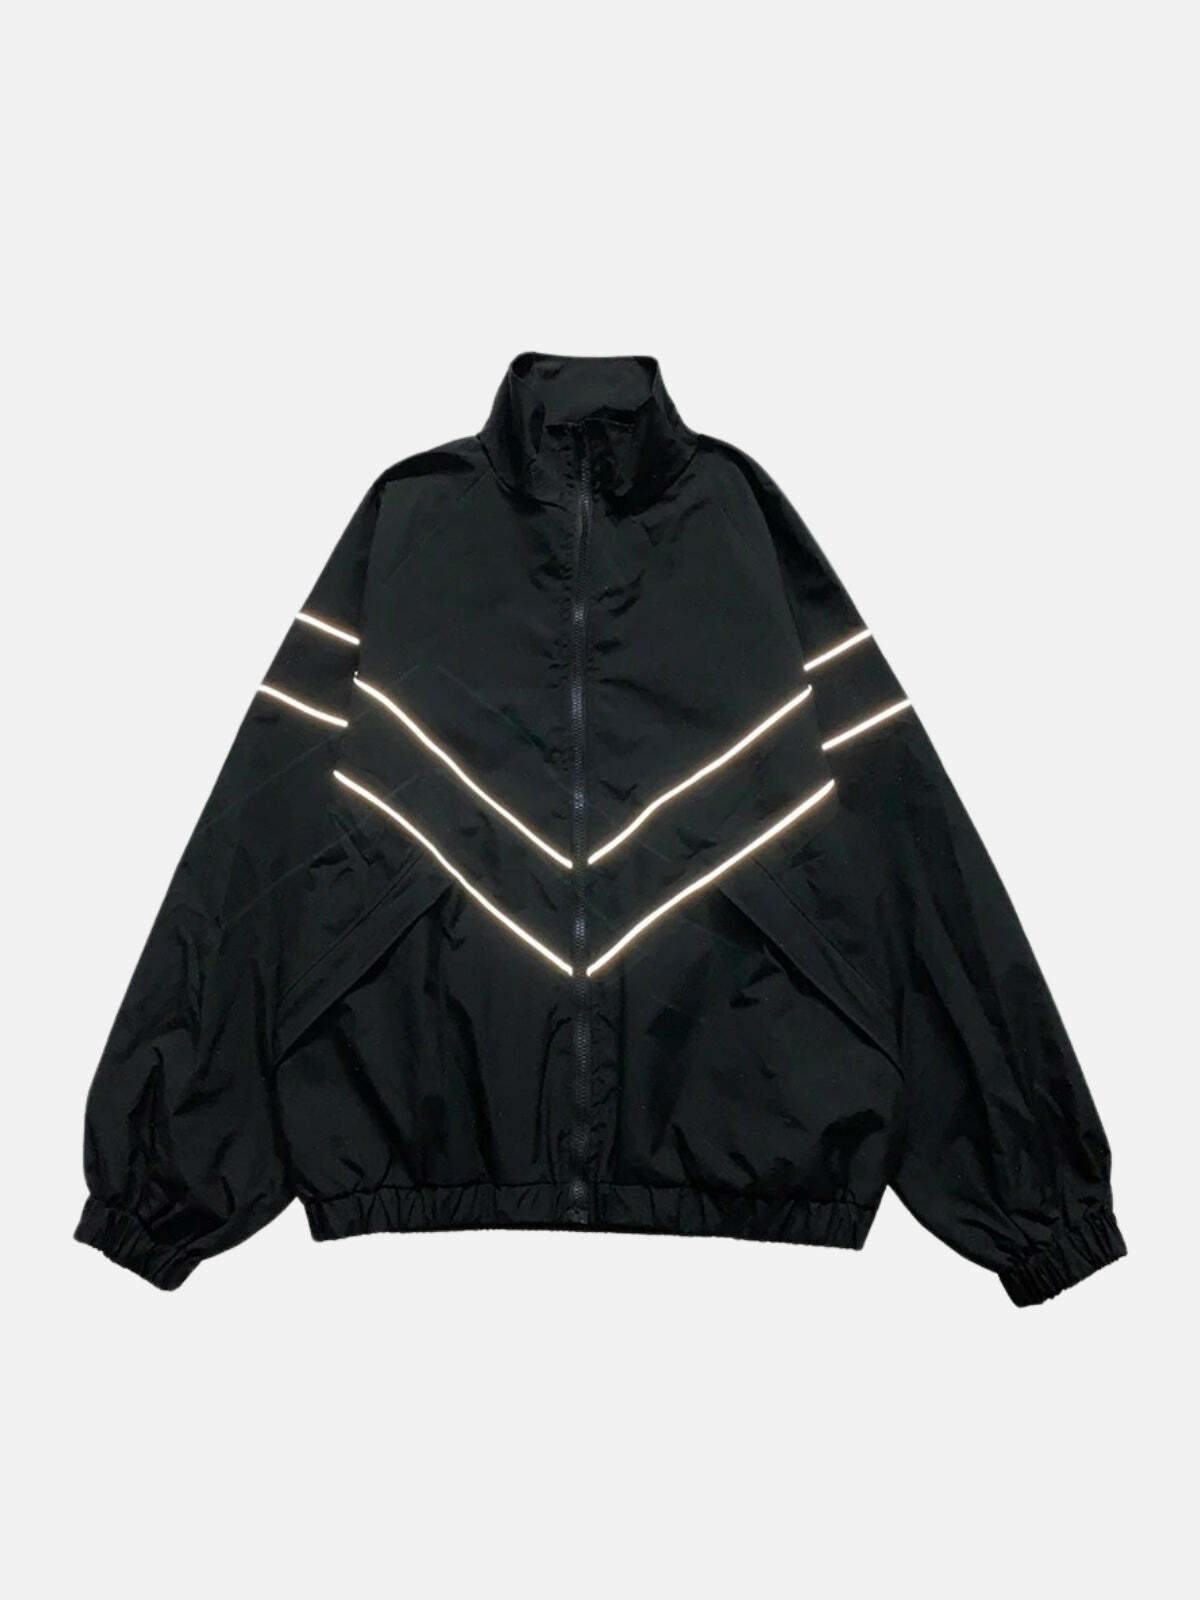 reflective striped jacket edgy & urban streetwear 5957